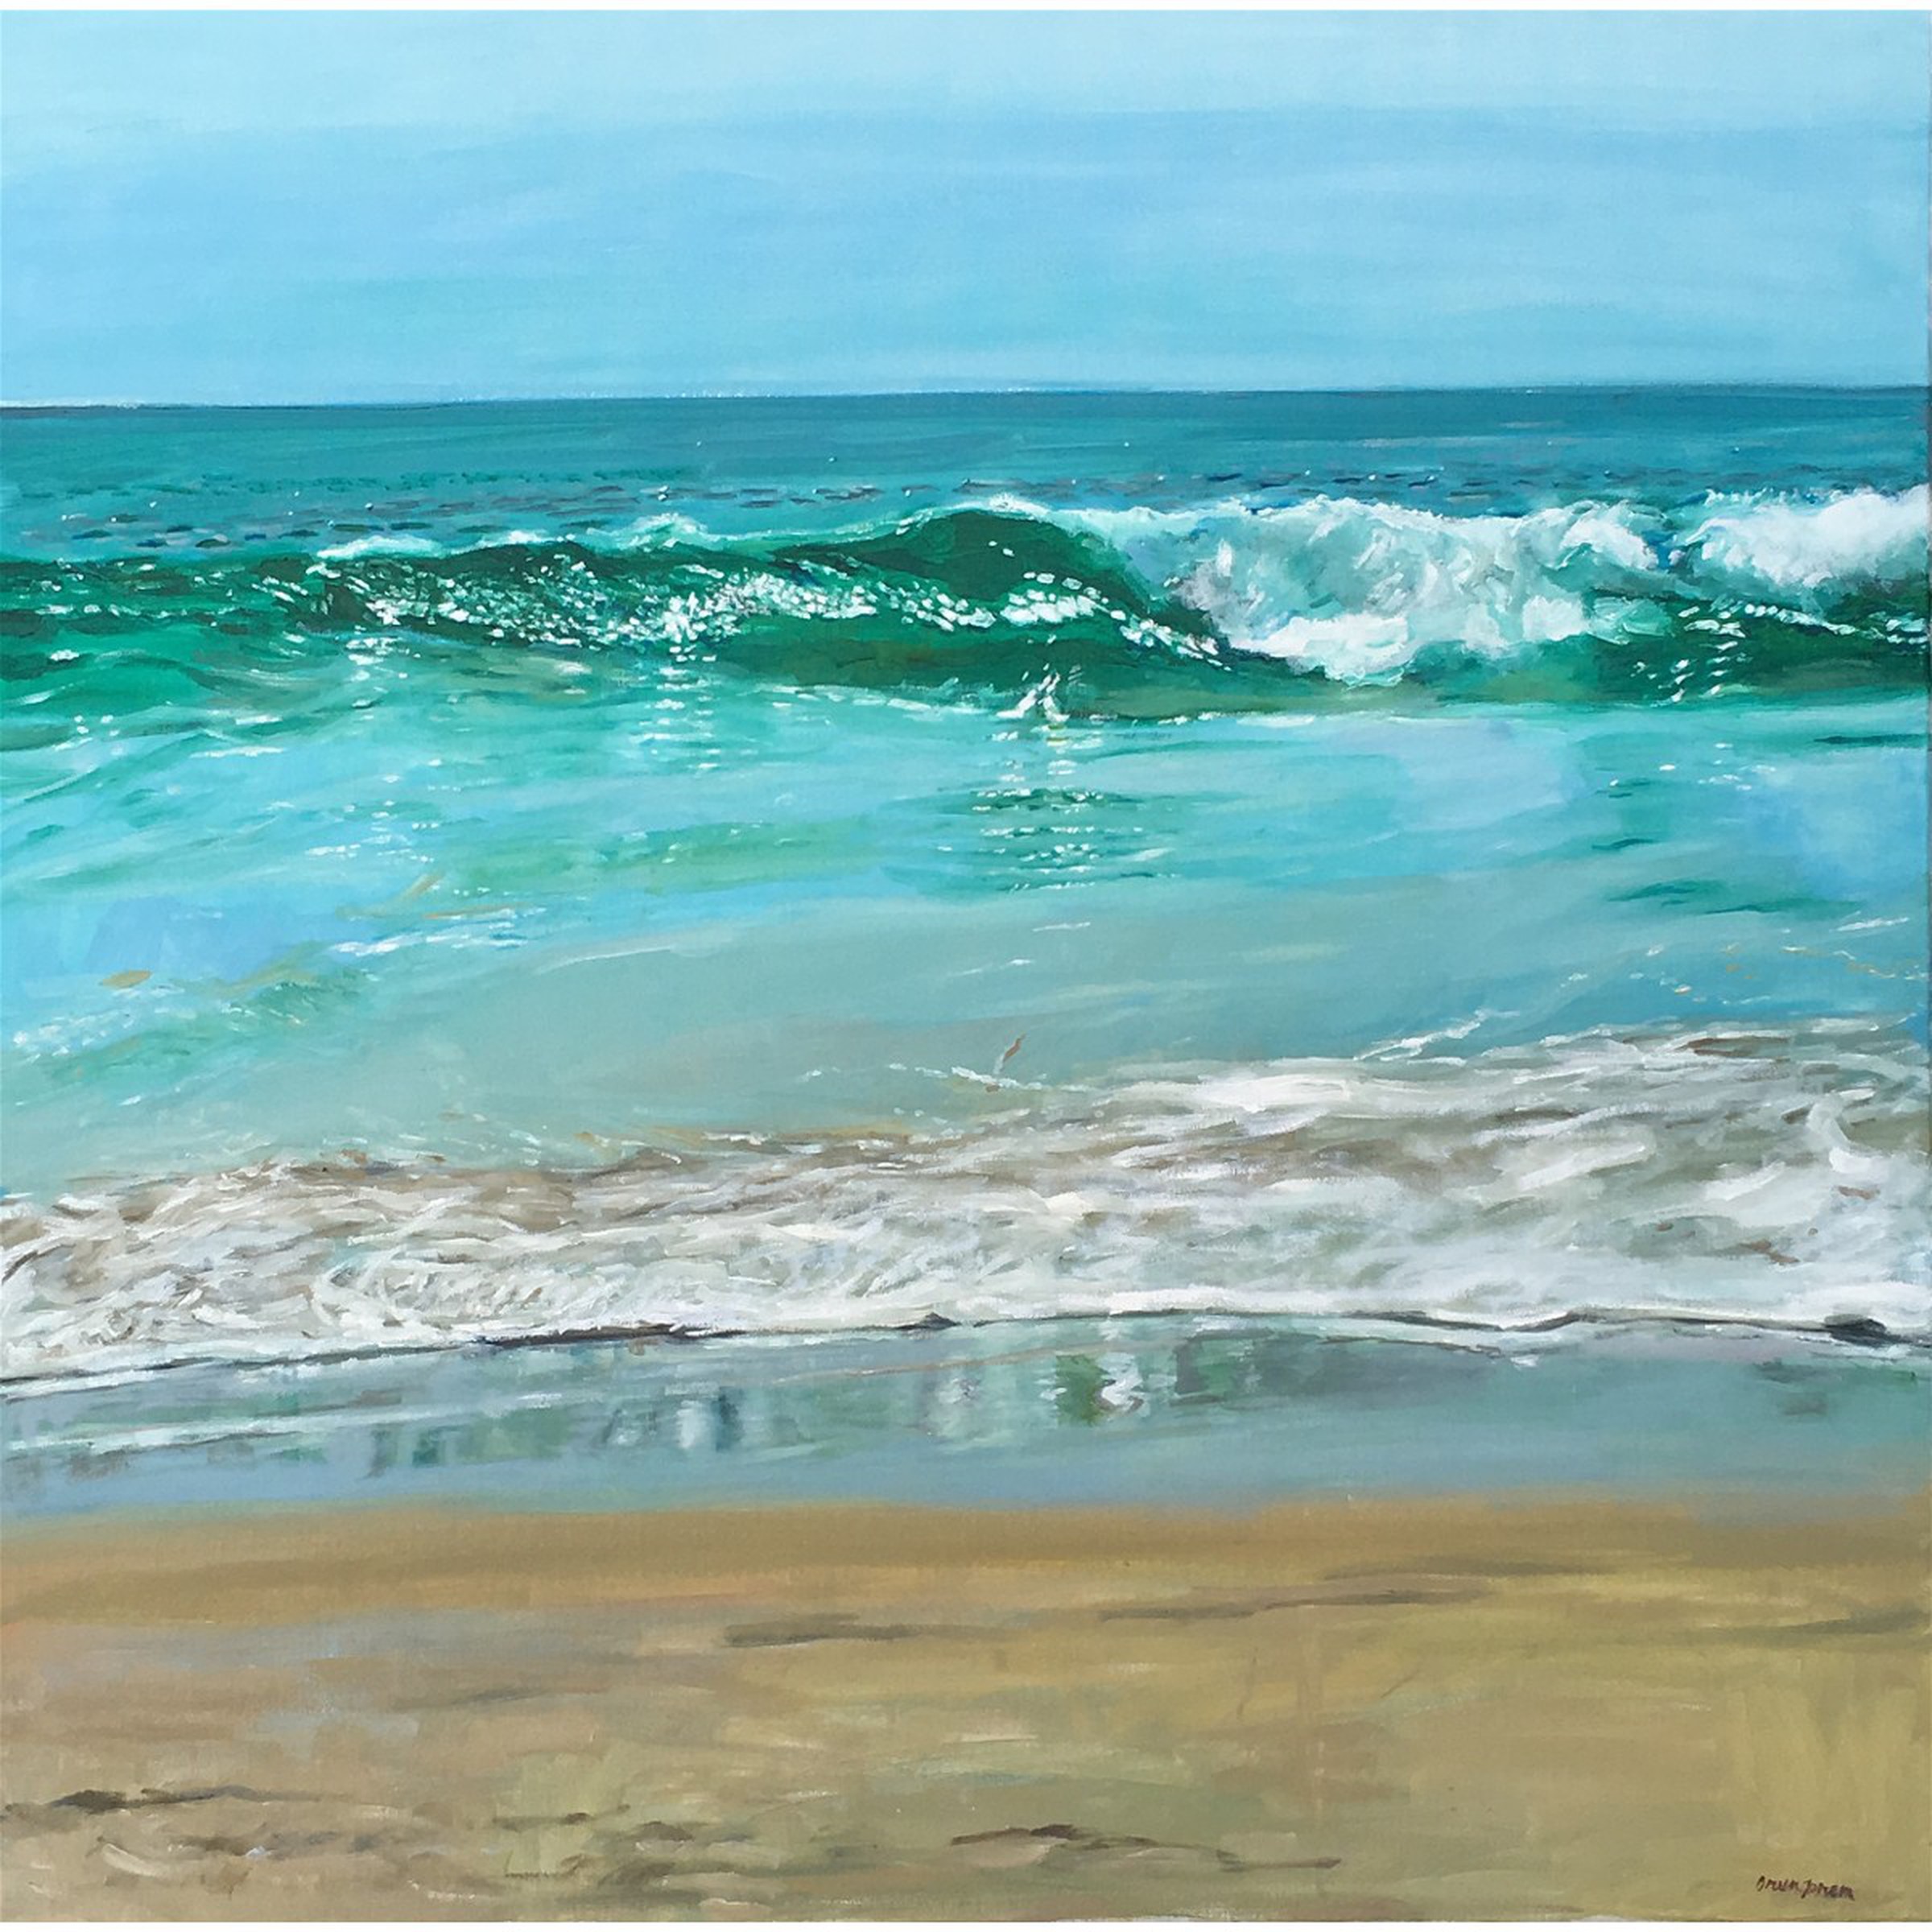 The Sparkling Sea Oil Painting By Arun Prem Artfinder